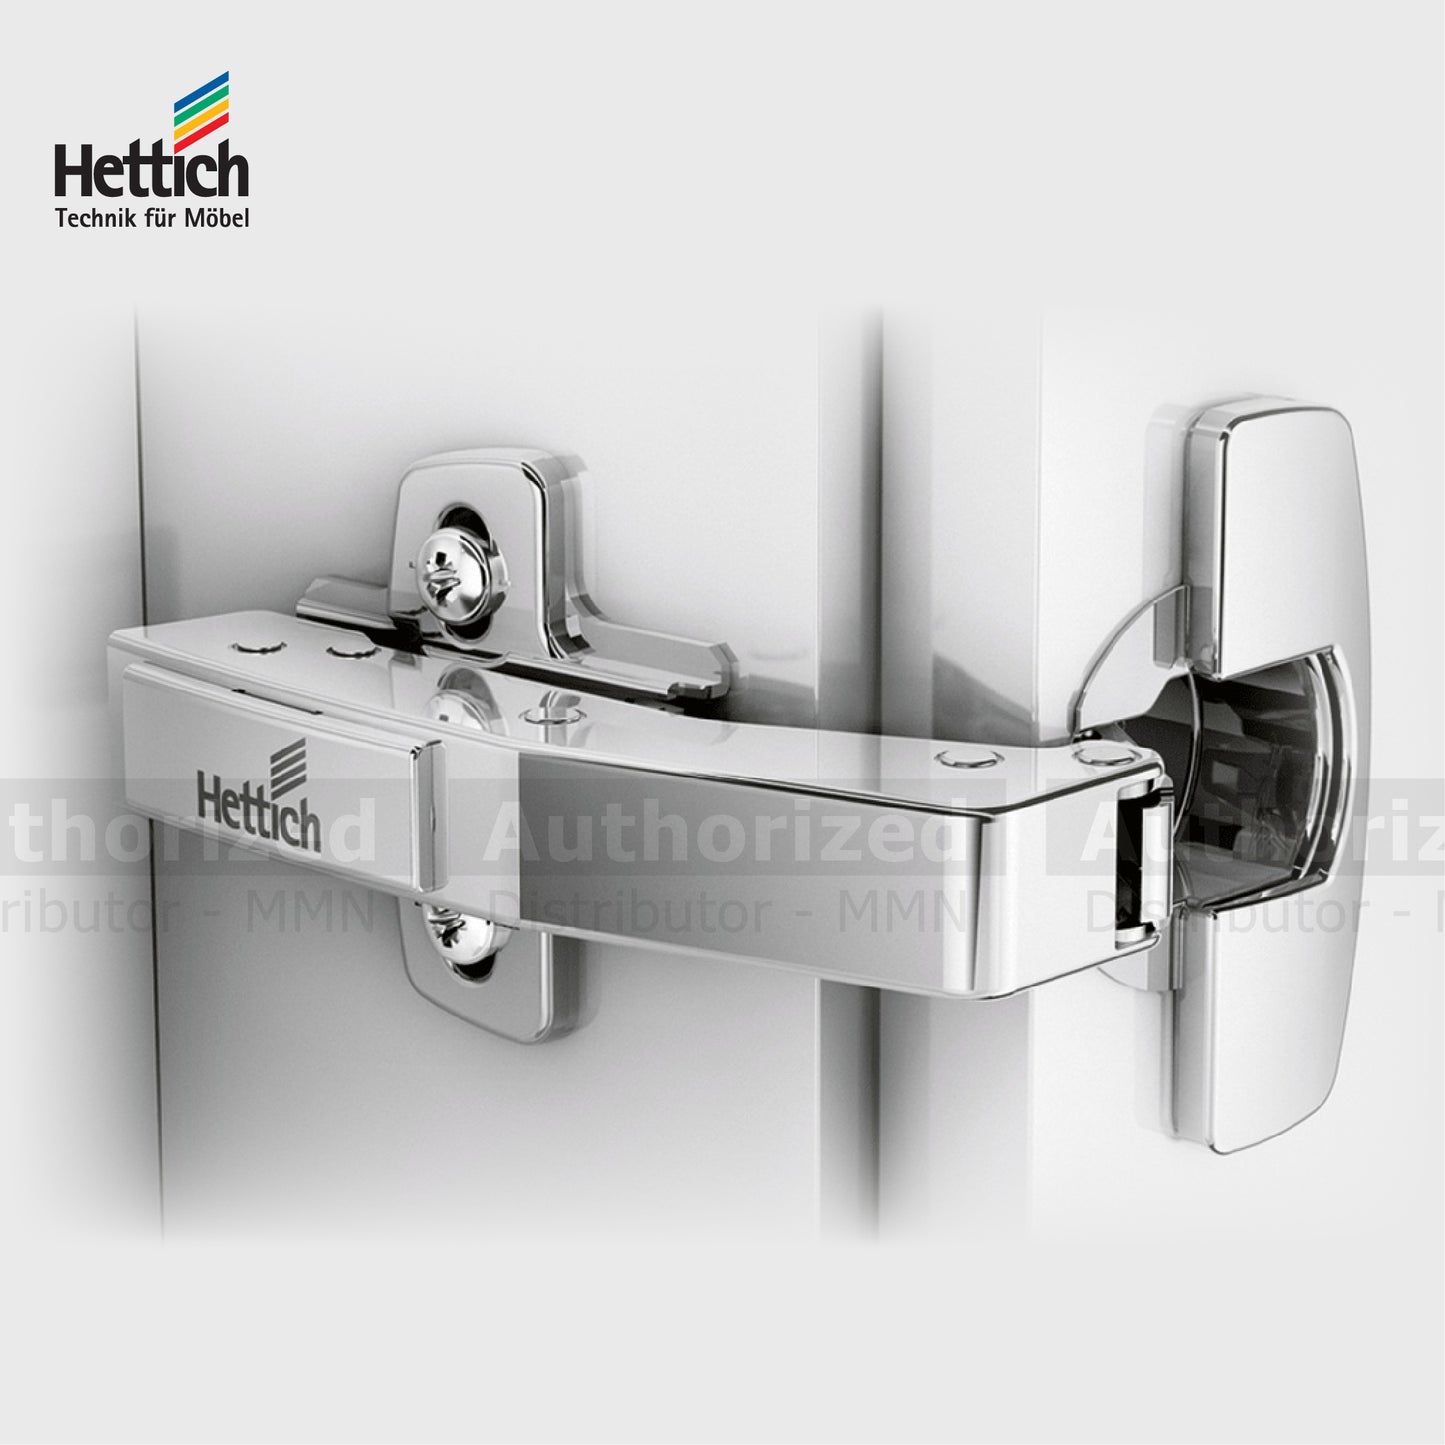 Hettich Sensys 8639i W90 Blind Corner Hinge Opening Angle 90° Steel Nickel Plated- HT9243043